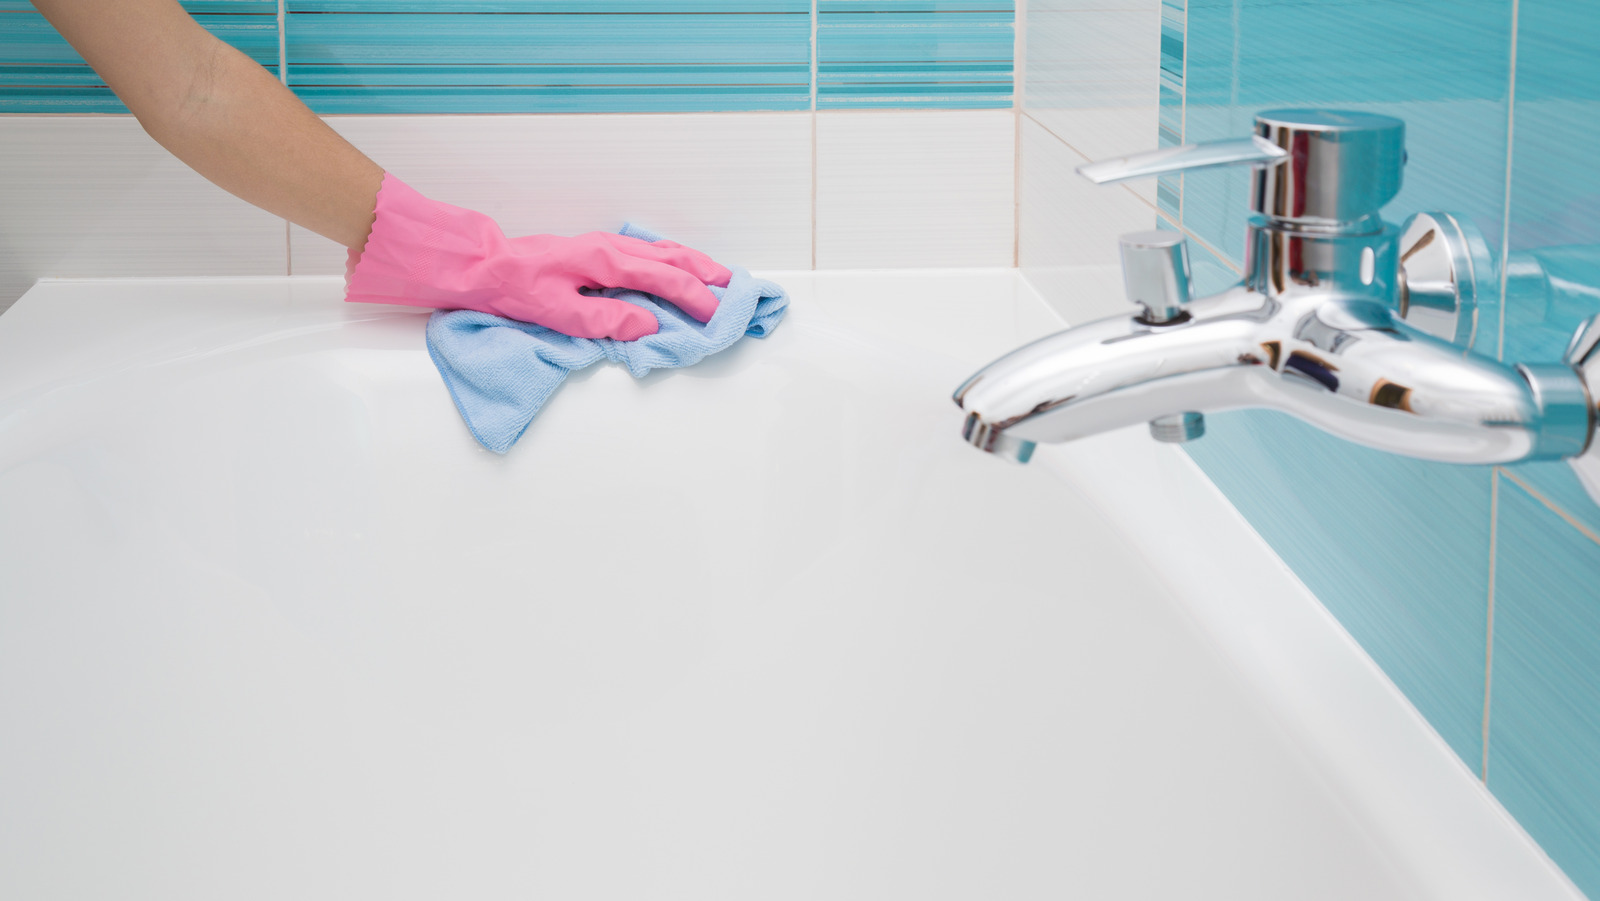 Cleen-Net Bathroom: Natural bathroom cleaner - removes soap scum